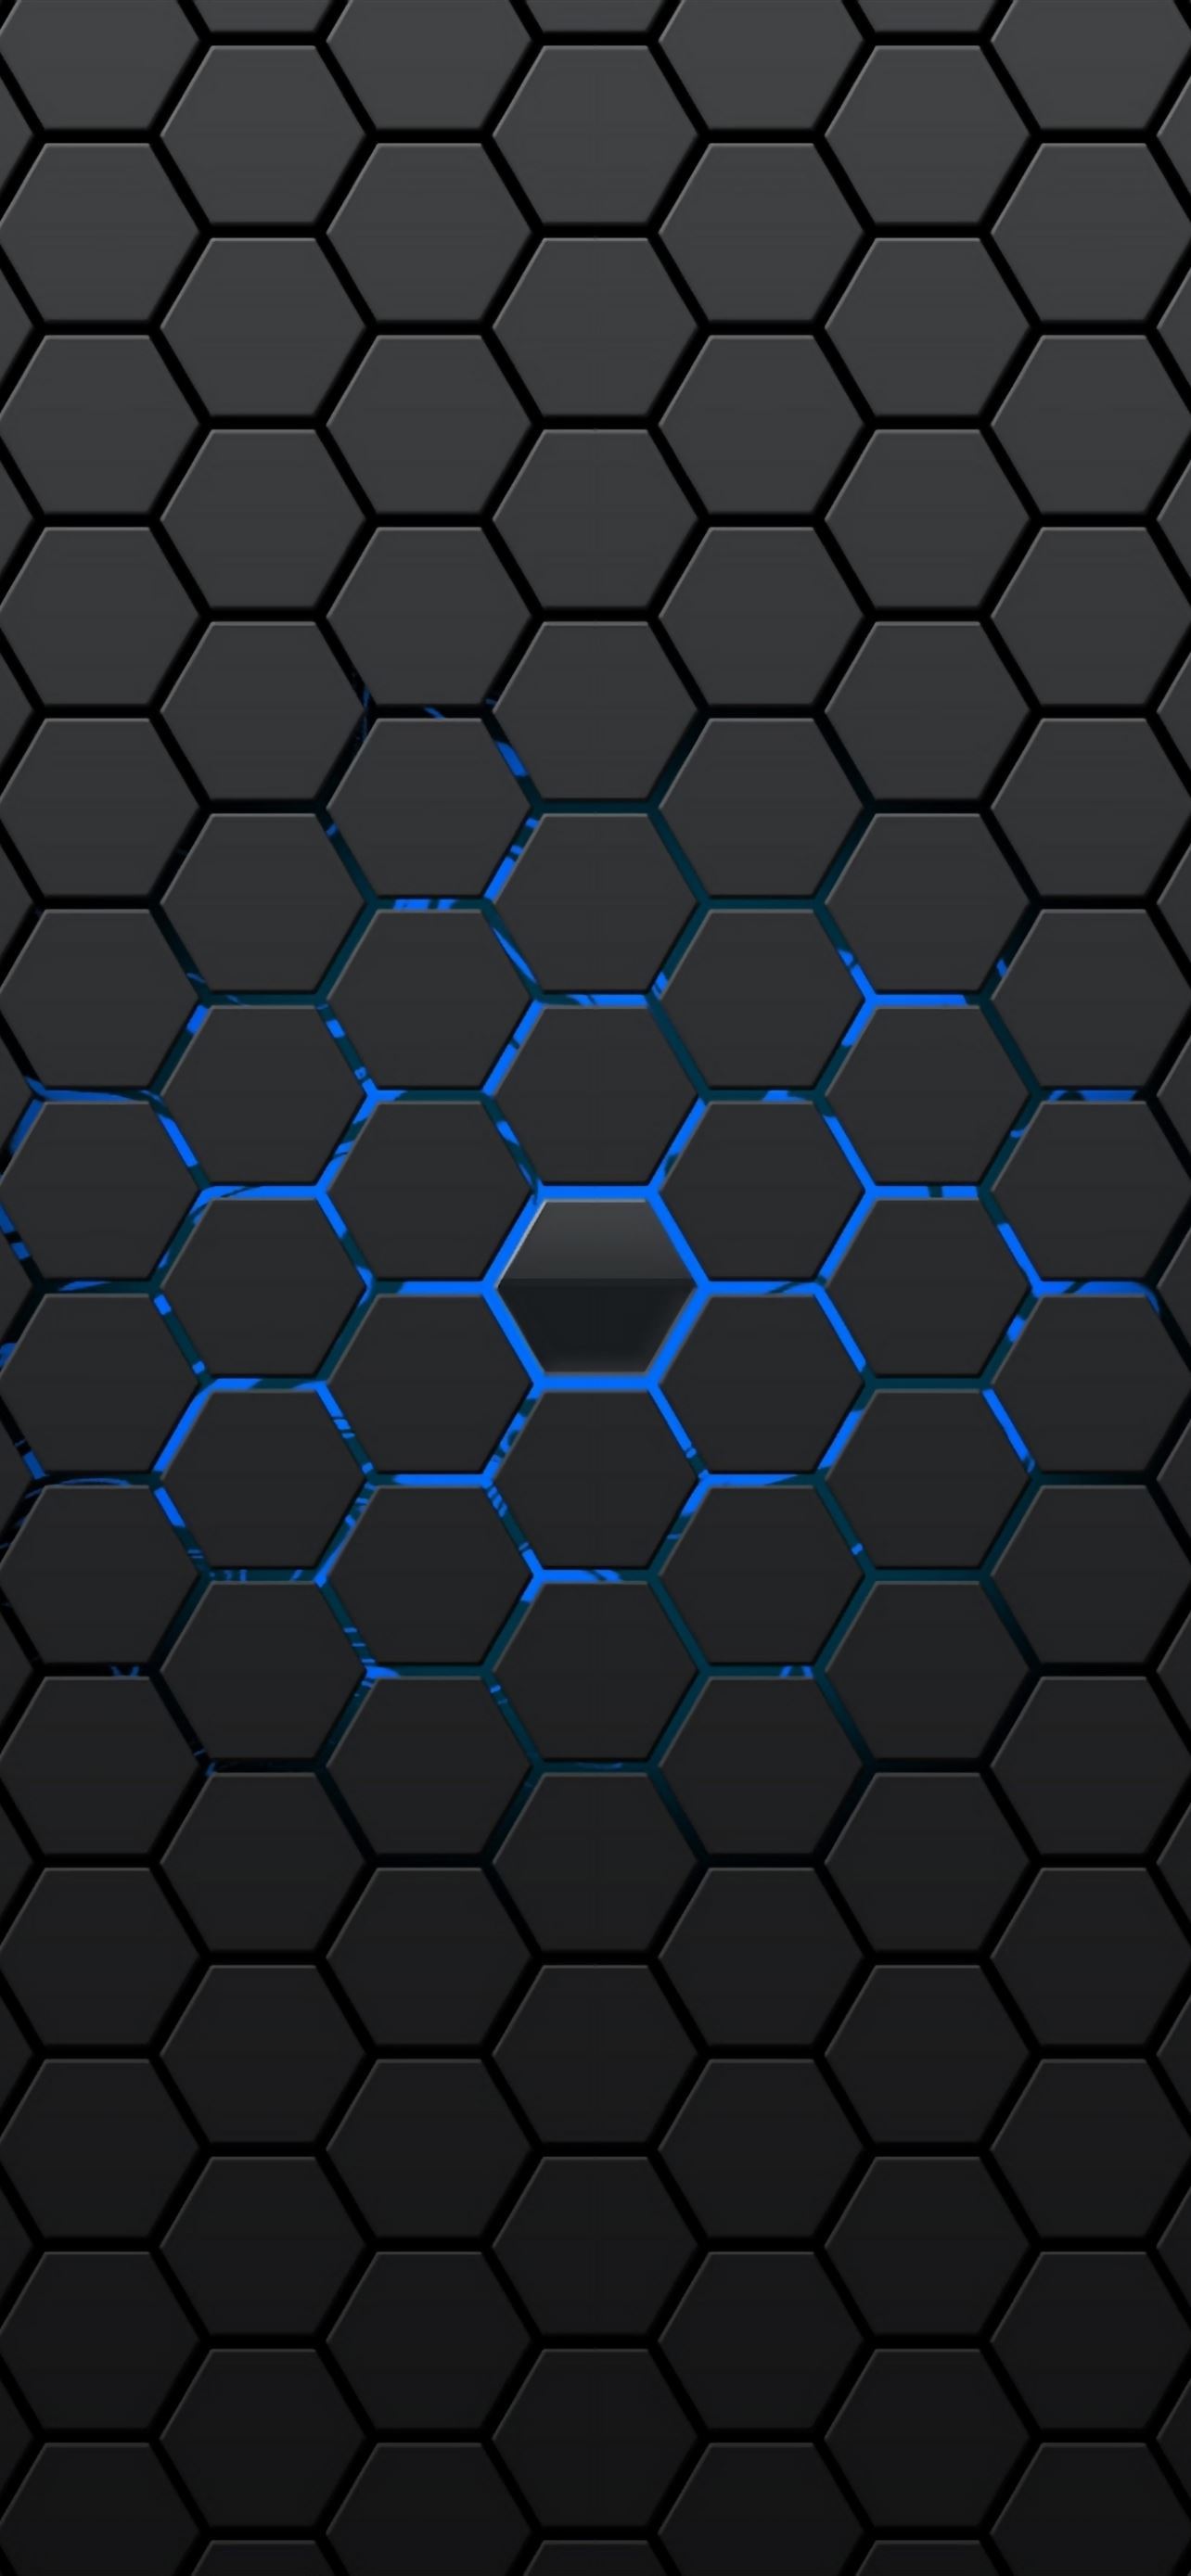 Honeycomb Pattern iPhone Wallpaper Free Download